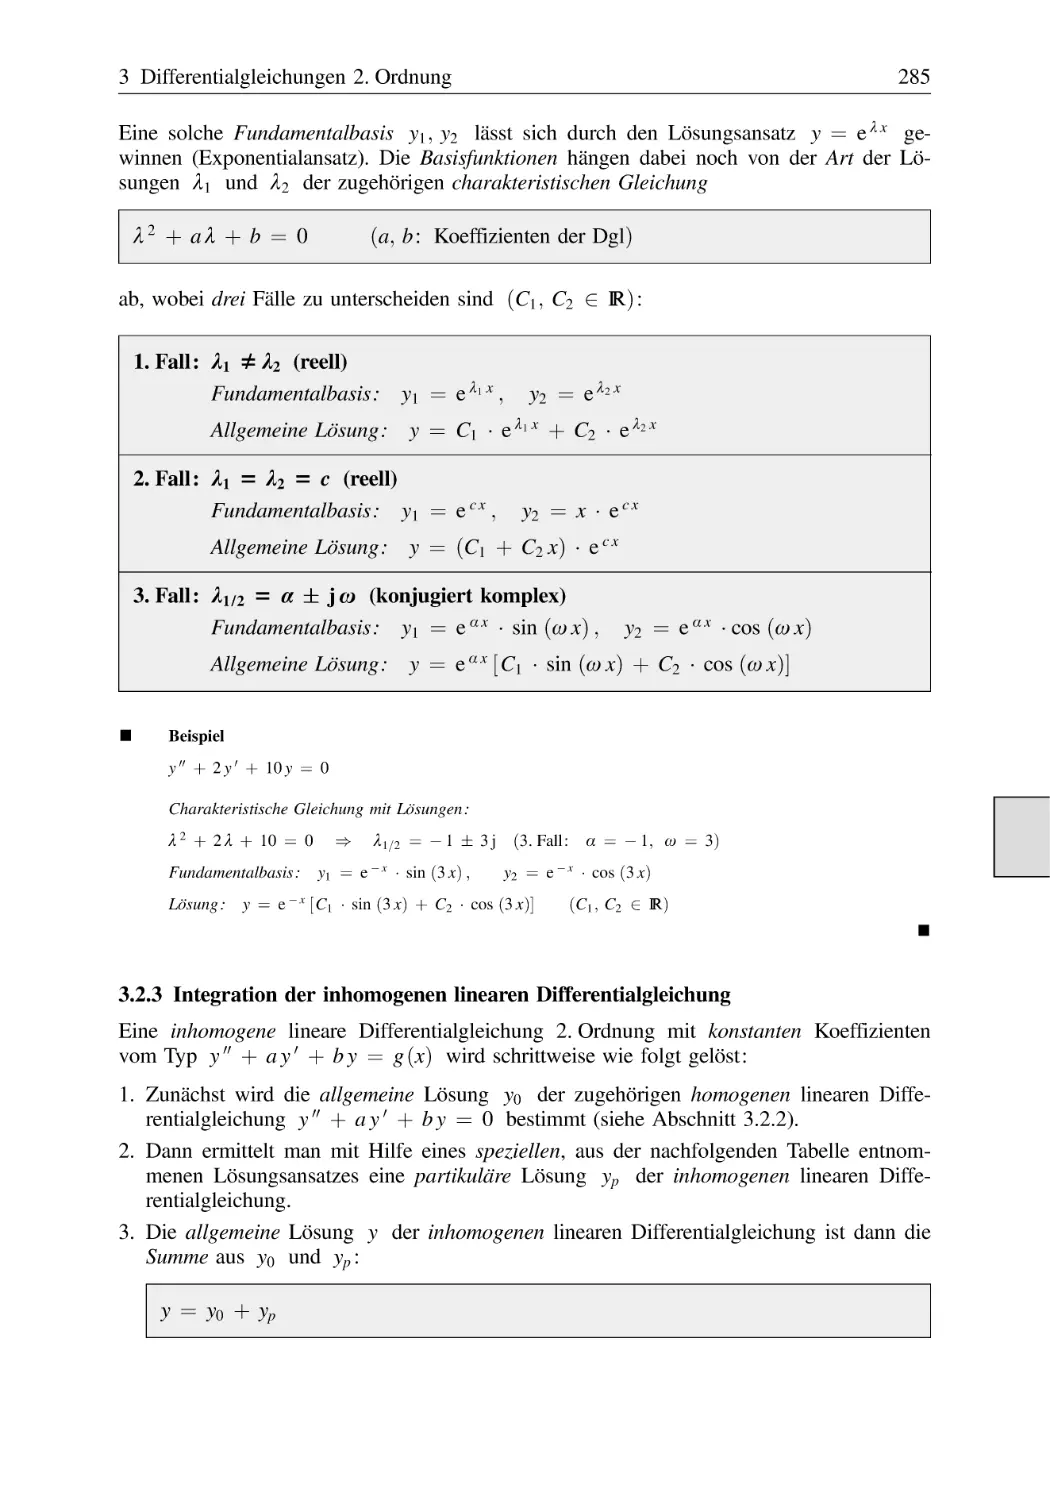 3.2.3 Integration der inhomogenen linearen Differentialgleichung